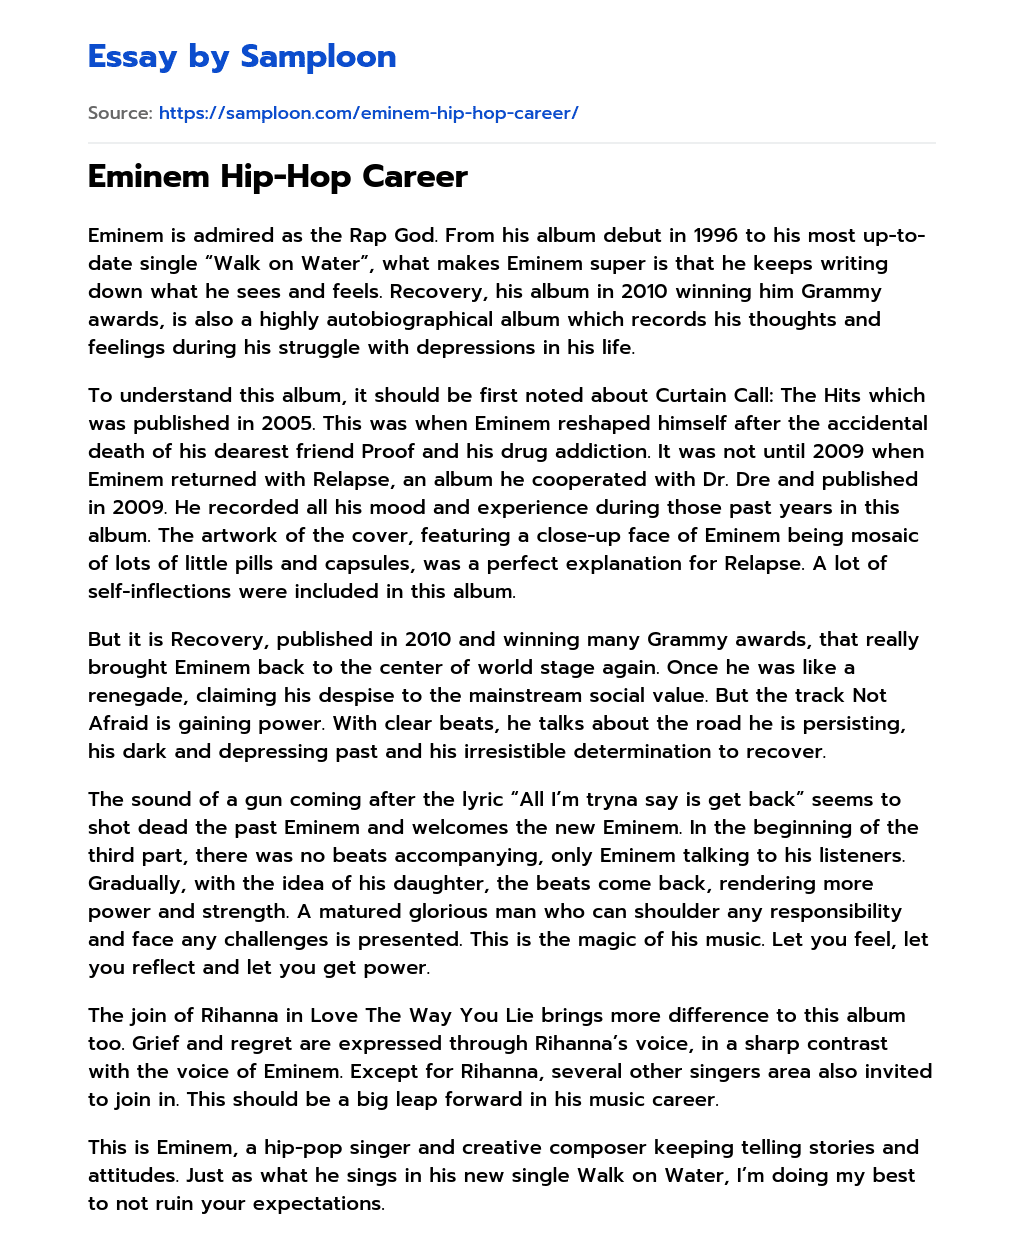 Eminem Hip-Hop Career essay